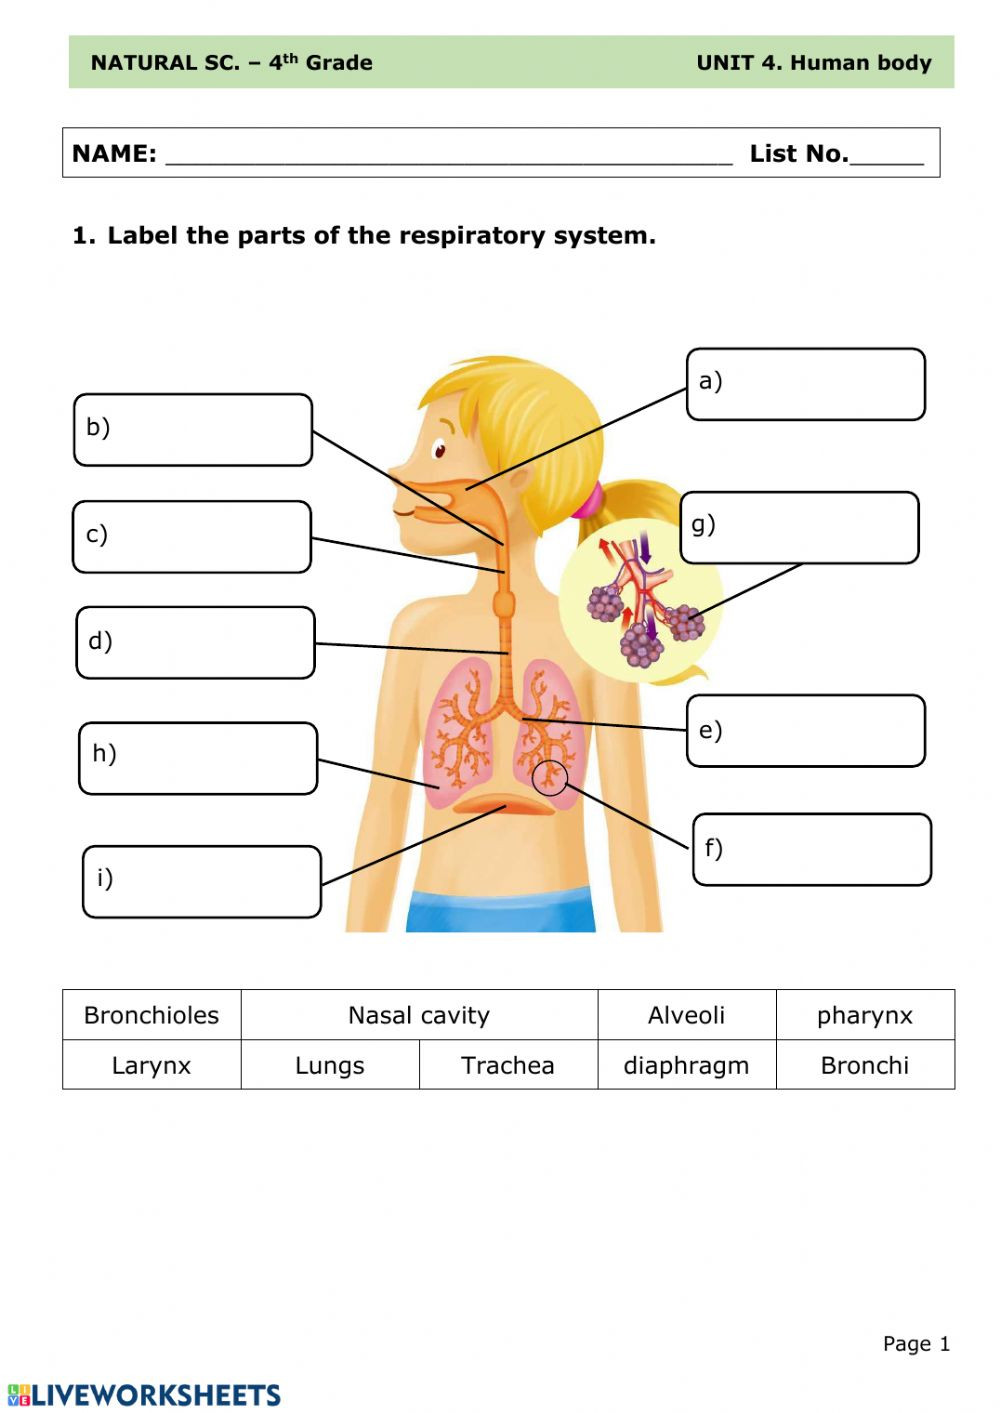 Respiratory system ro kx